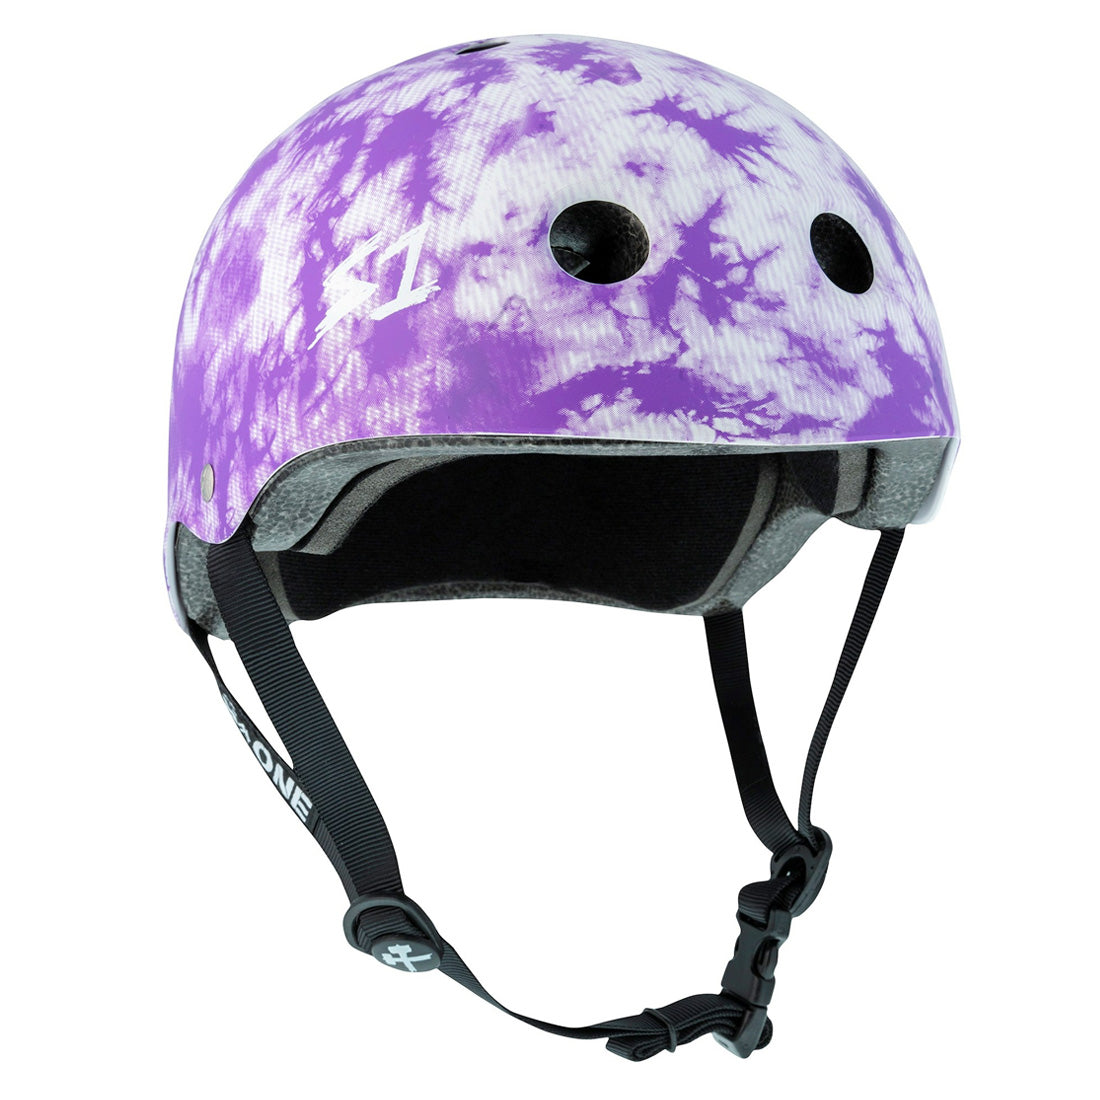 S-One Lifer Helmet - Tie Dye Purple/White Helmets